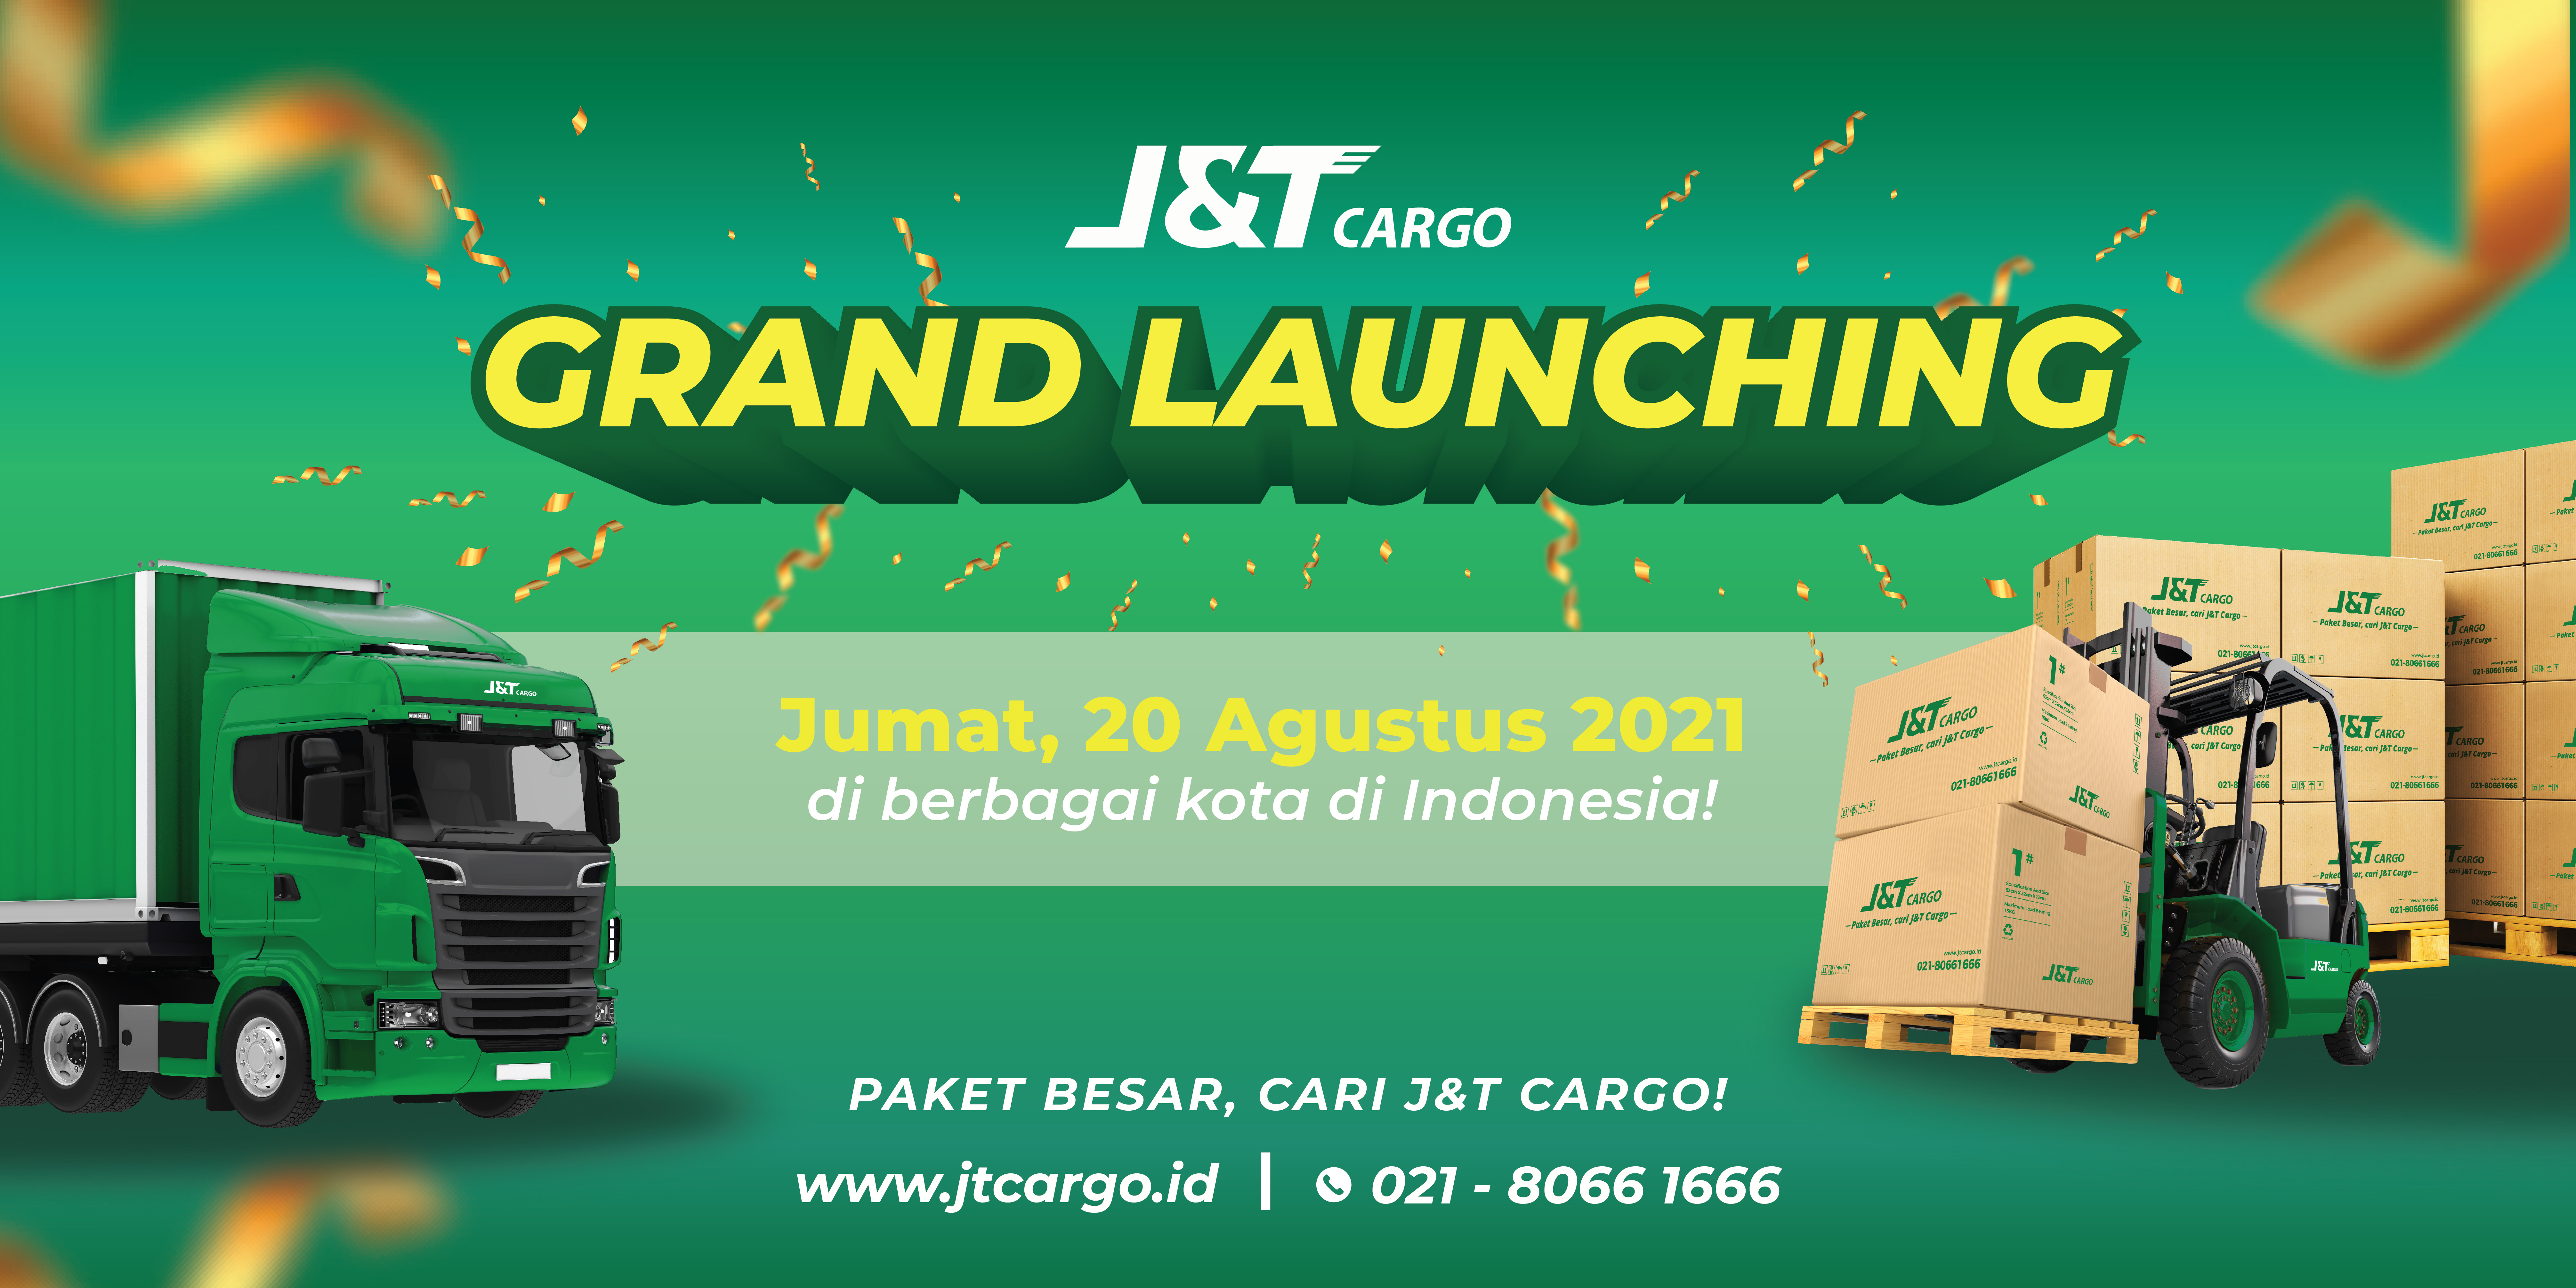 Cargo j&t